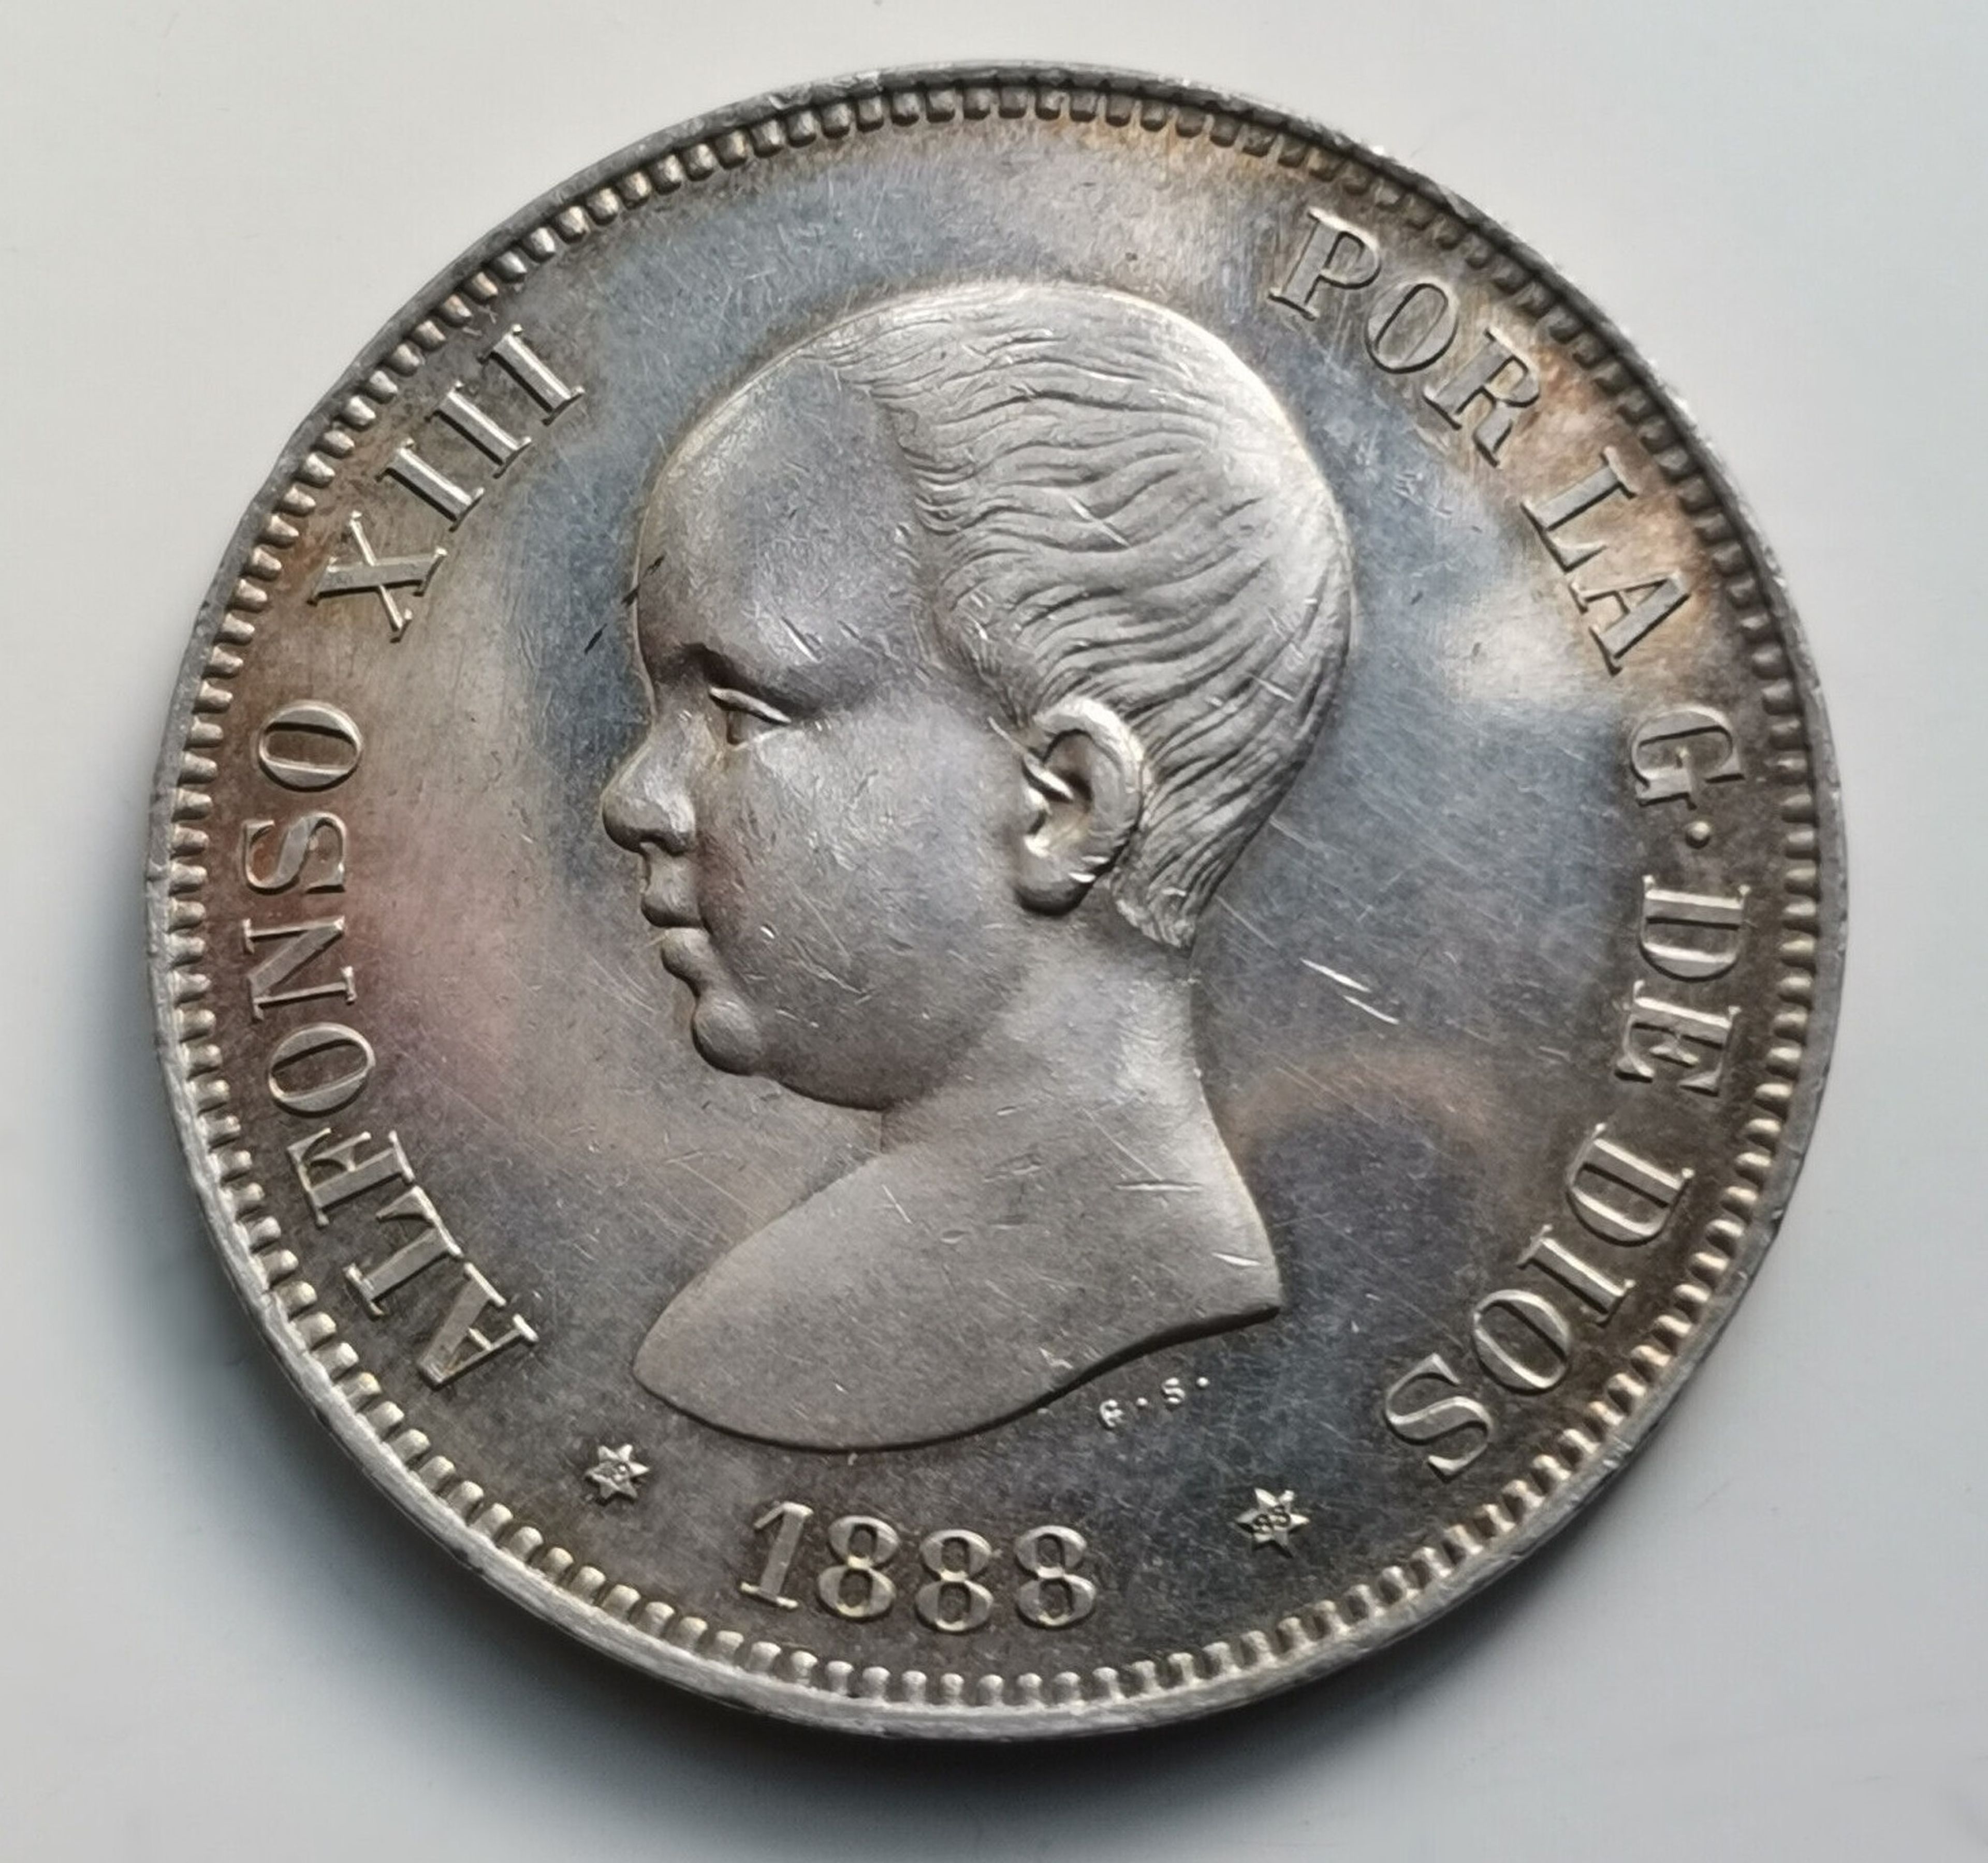 2 pesetas de 1888